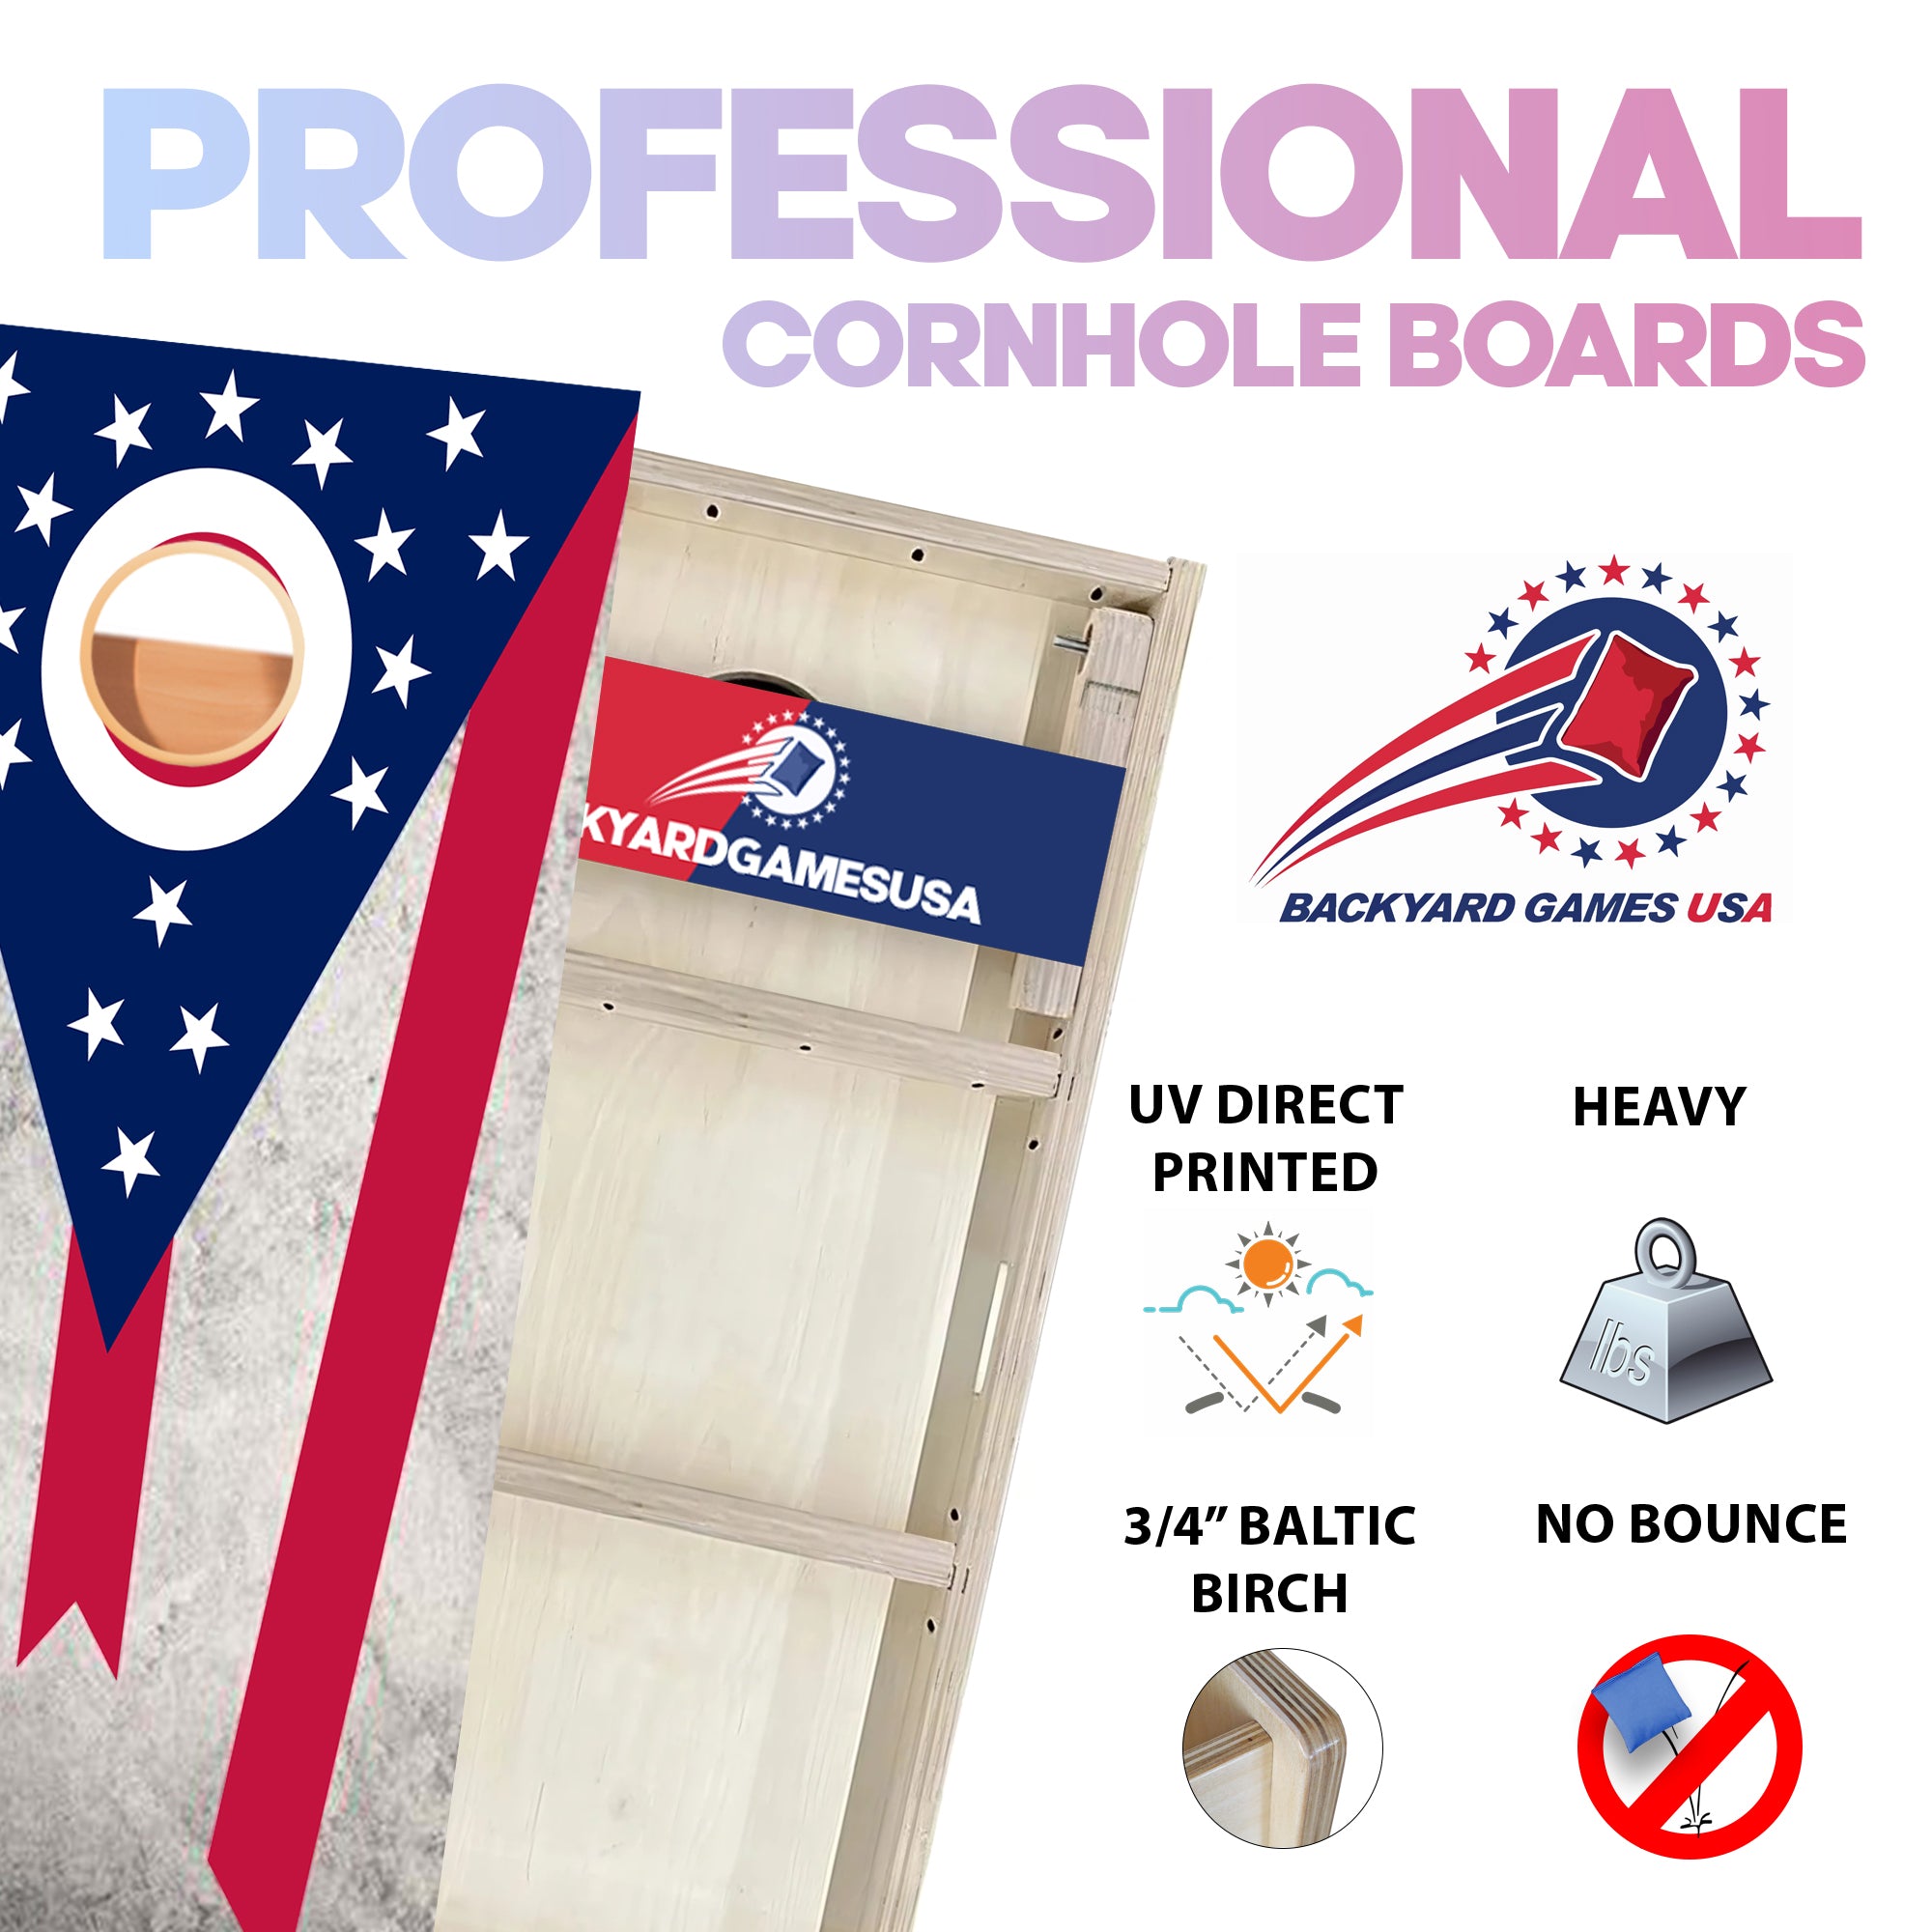 Ohio Professional Cornhole Boards